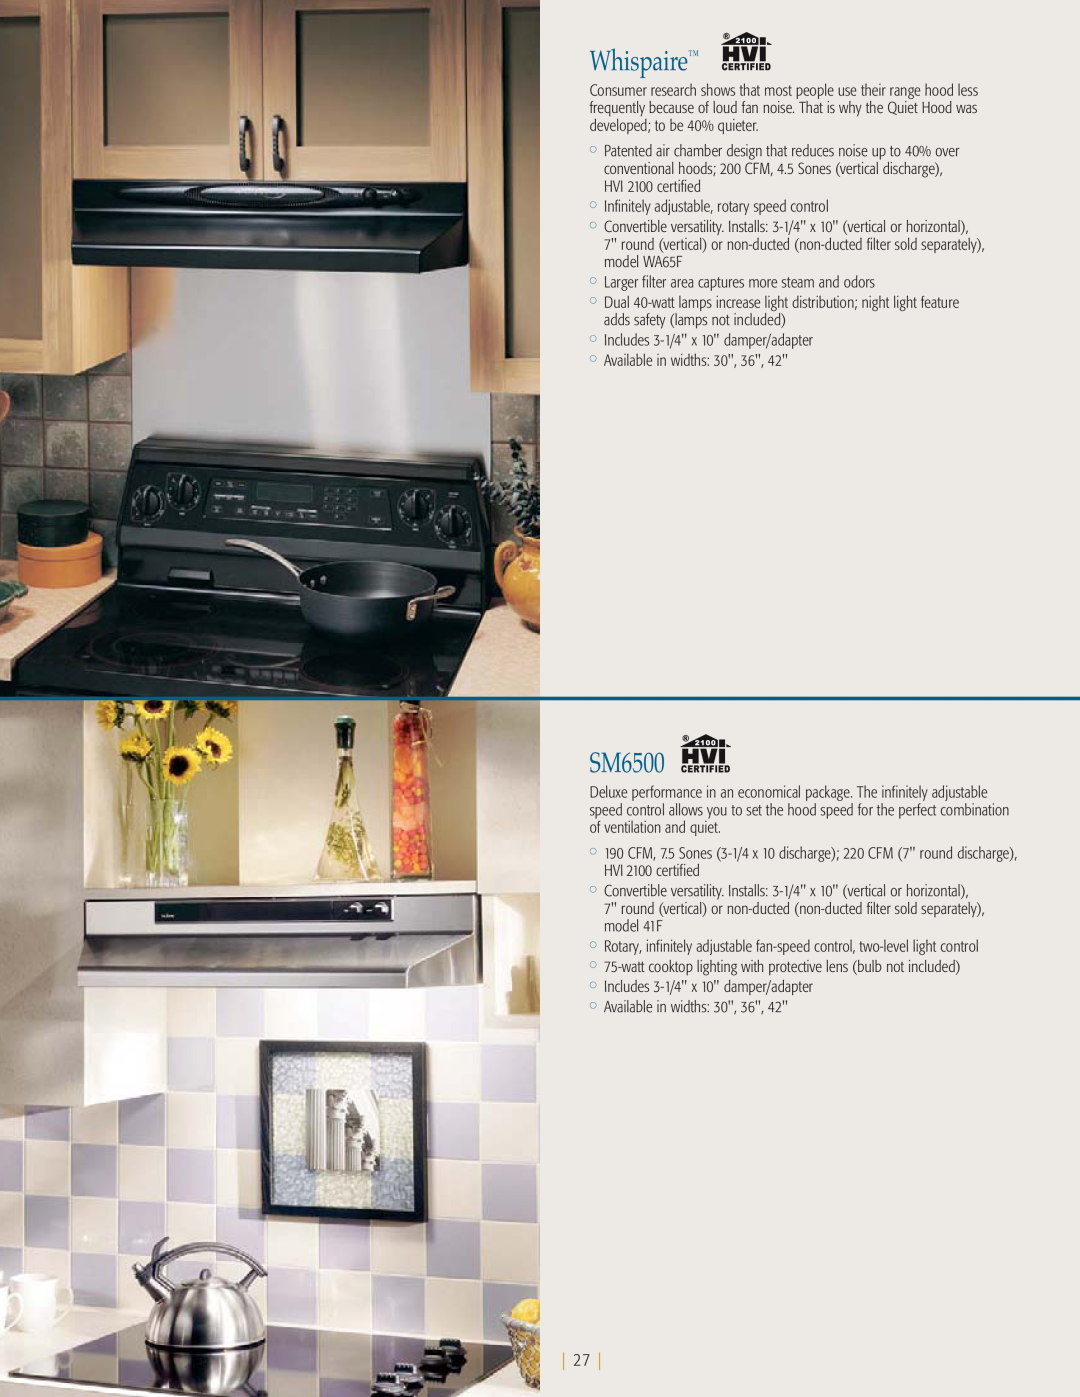 NuTone kitchen ventilation manual Whispaire, SM6500 